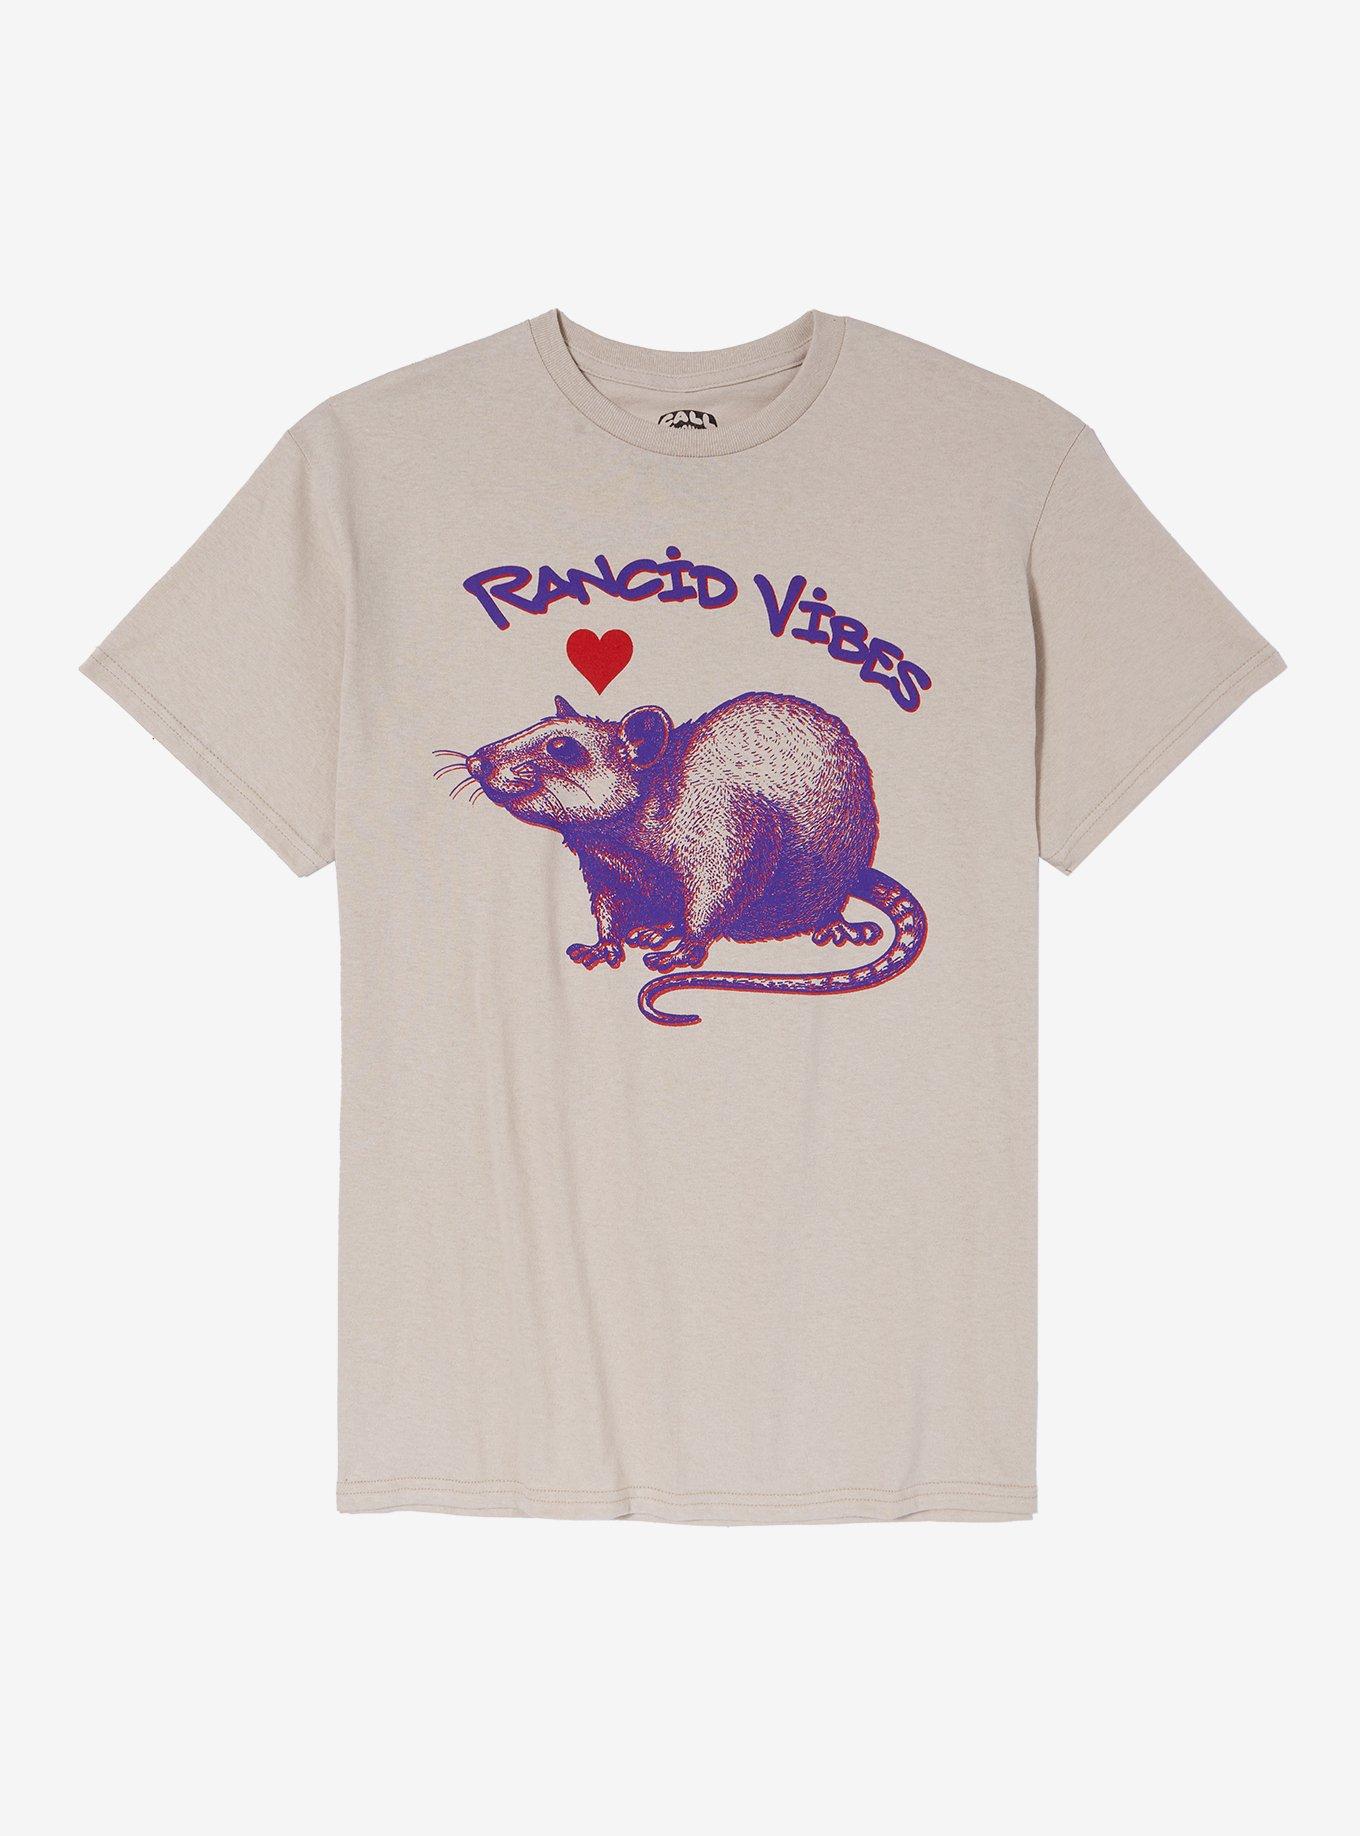 Rancid Vibes Rat T-Shirt By Call Your Mother, NATURAL, hi-res